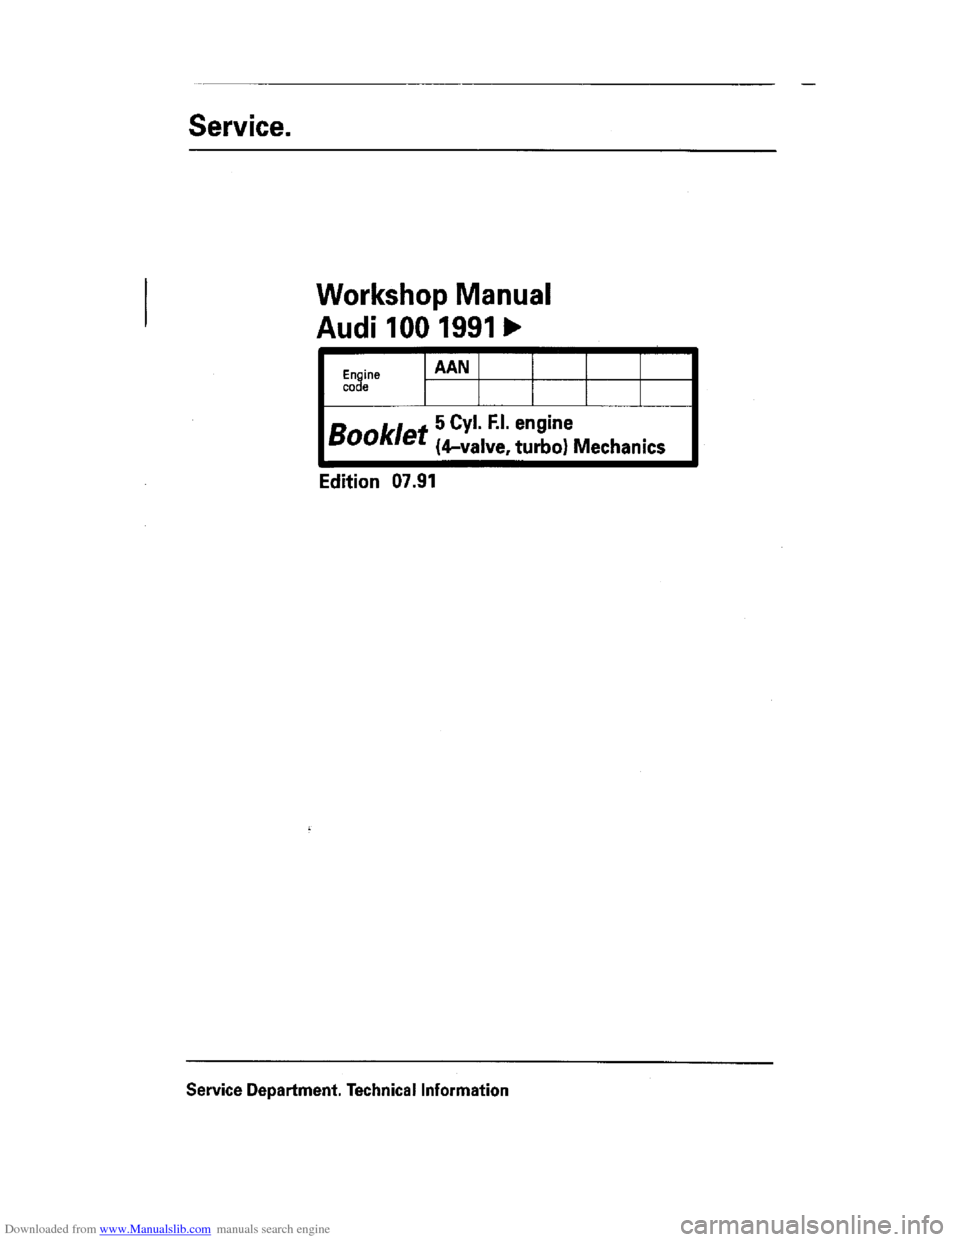 AUDI 100 1991 44 Engine Workshop Manual 